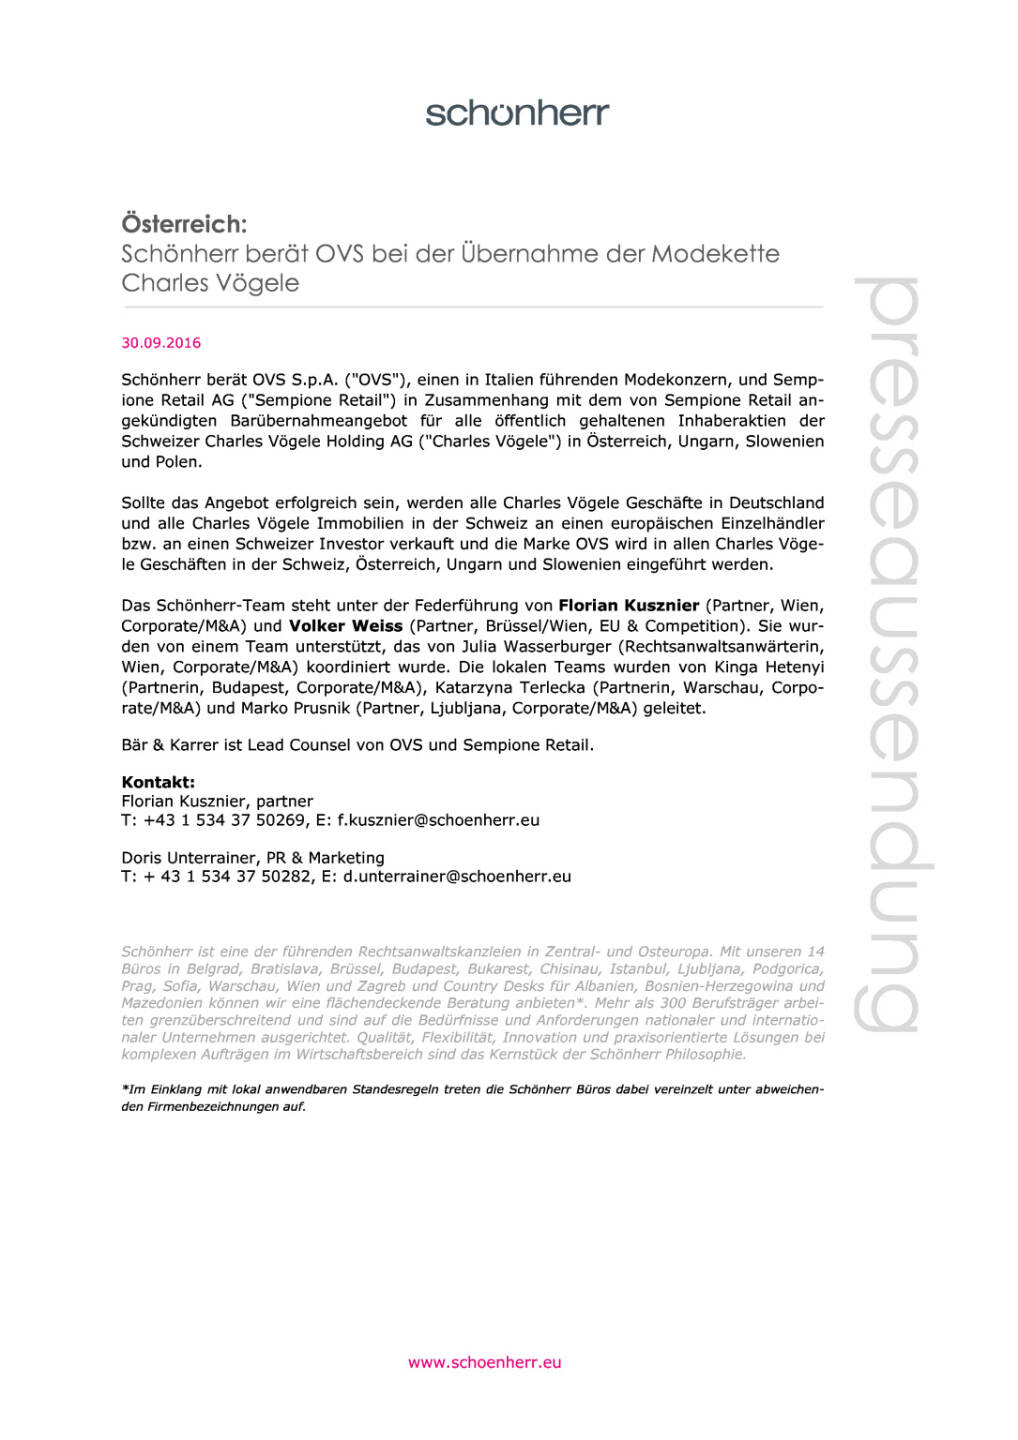 Schönherr berät OVS bei der Übernahme der Modekette Charles Vögele , Seite 1/1, komplettes Dokument unter http://boerse-social.com/static/uploads/file_1858_schonherr_berat_ovs_bei_der_ubernahme_der_modekette_charles_vogele.pdf